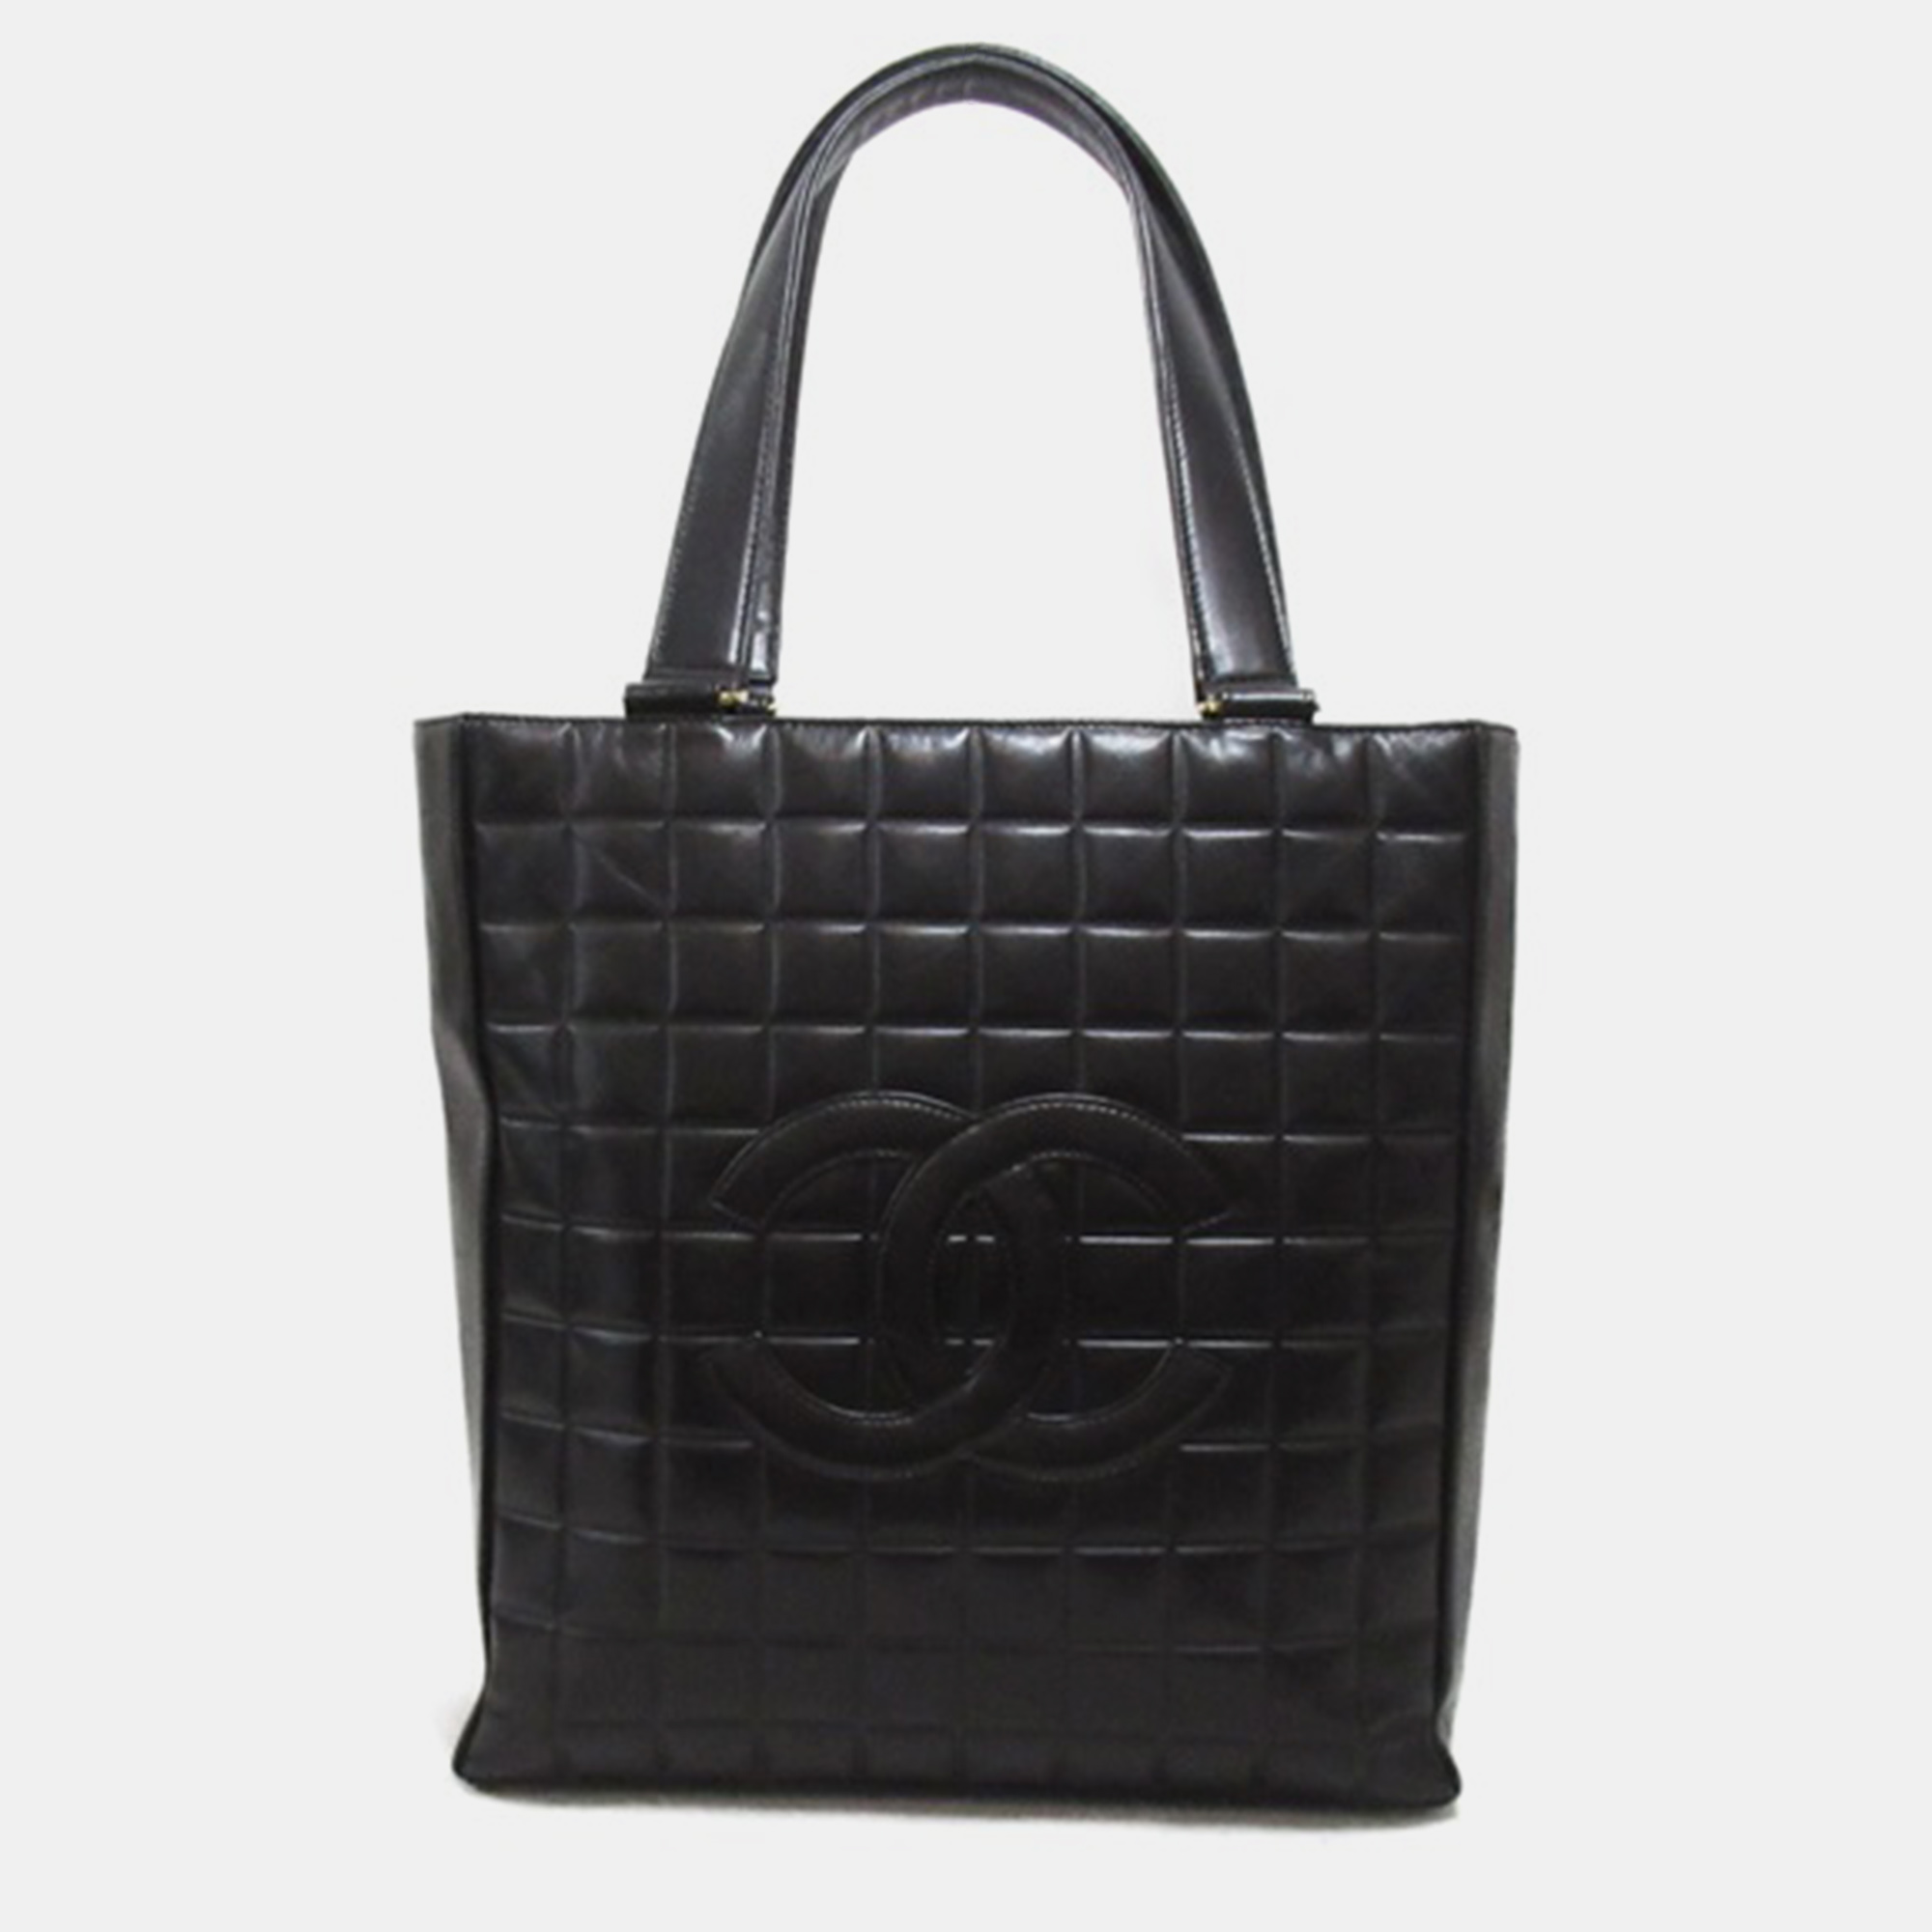 

Chanel Black Leather CC Chocolate Bar Tote Bag